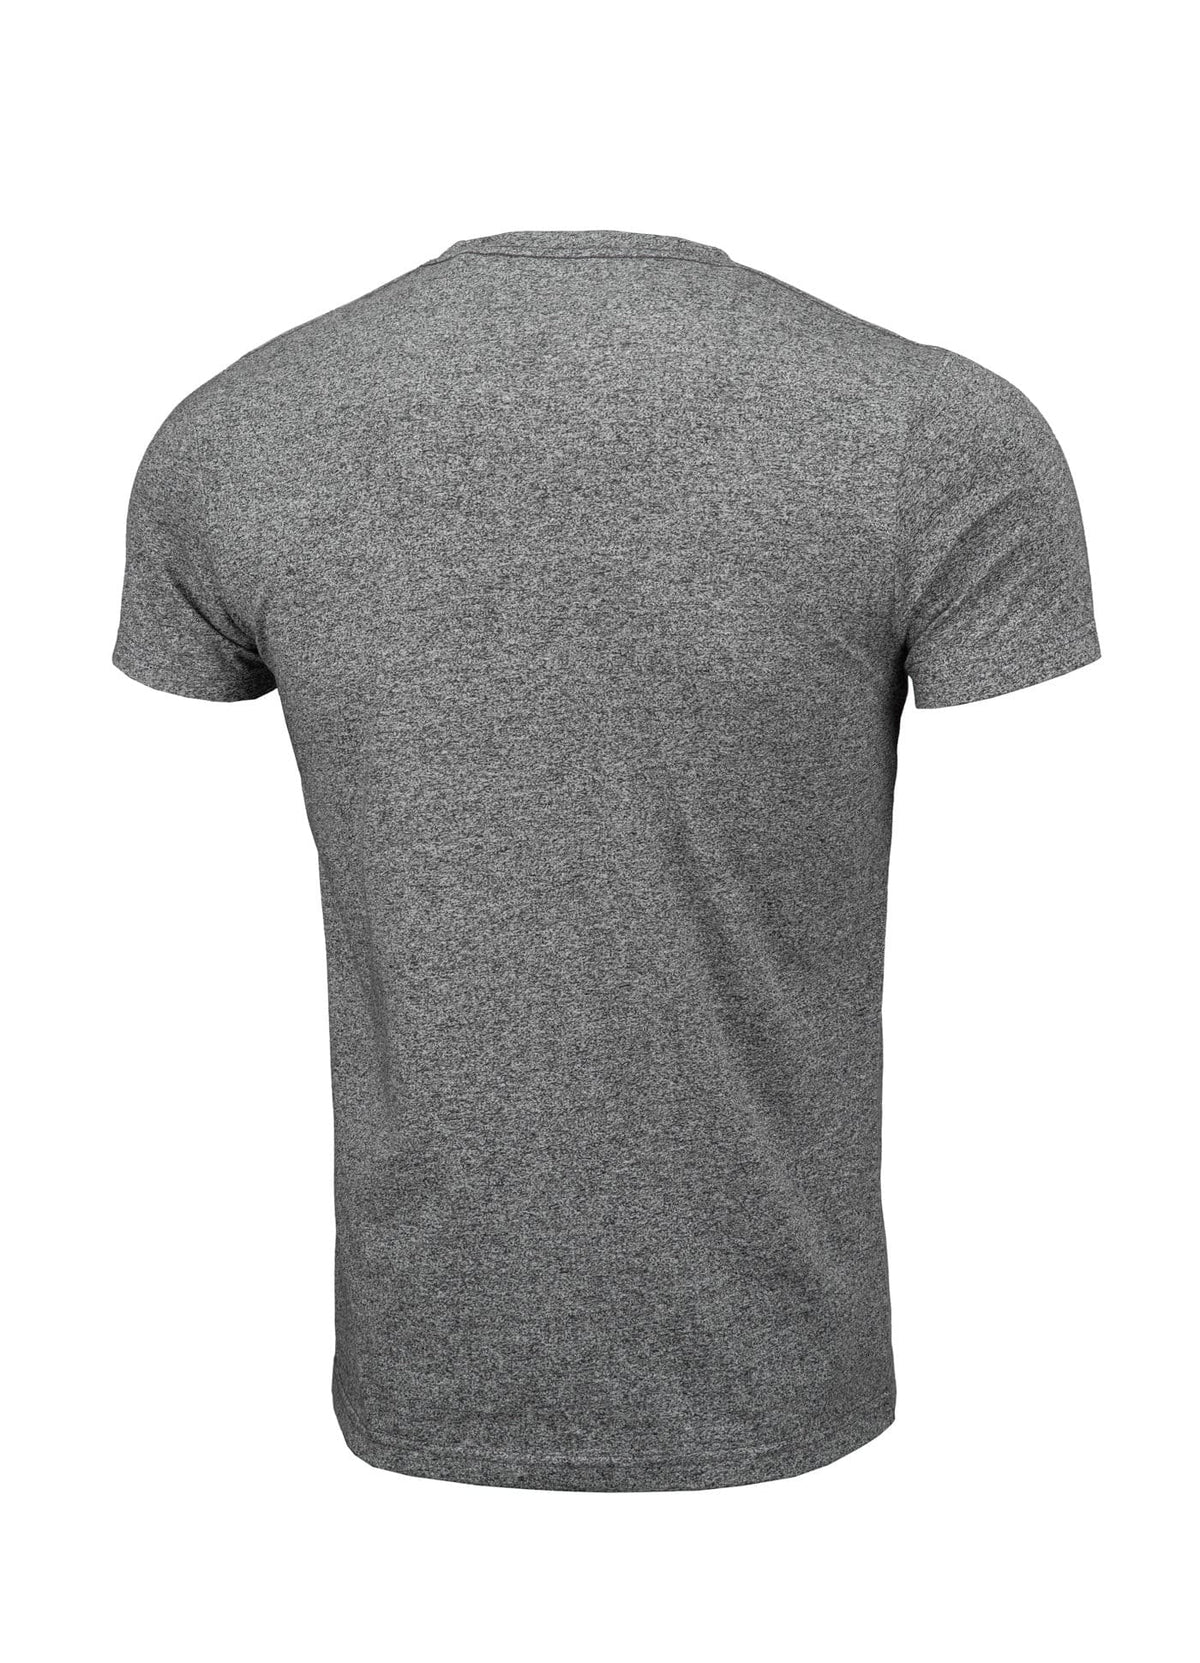 Small Logo Premium Grey T-shirt.